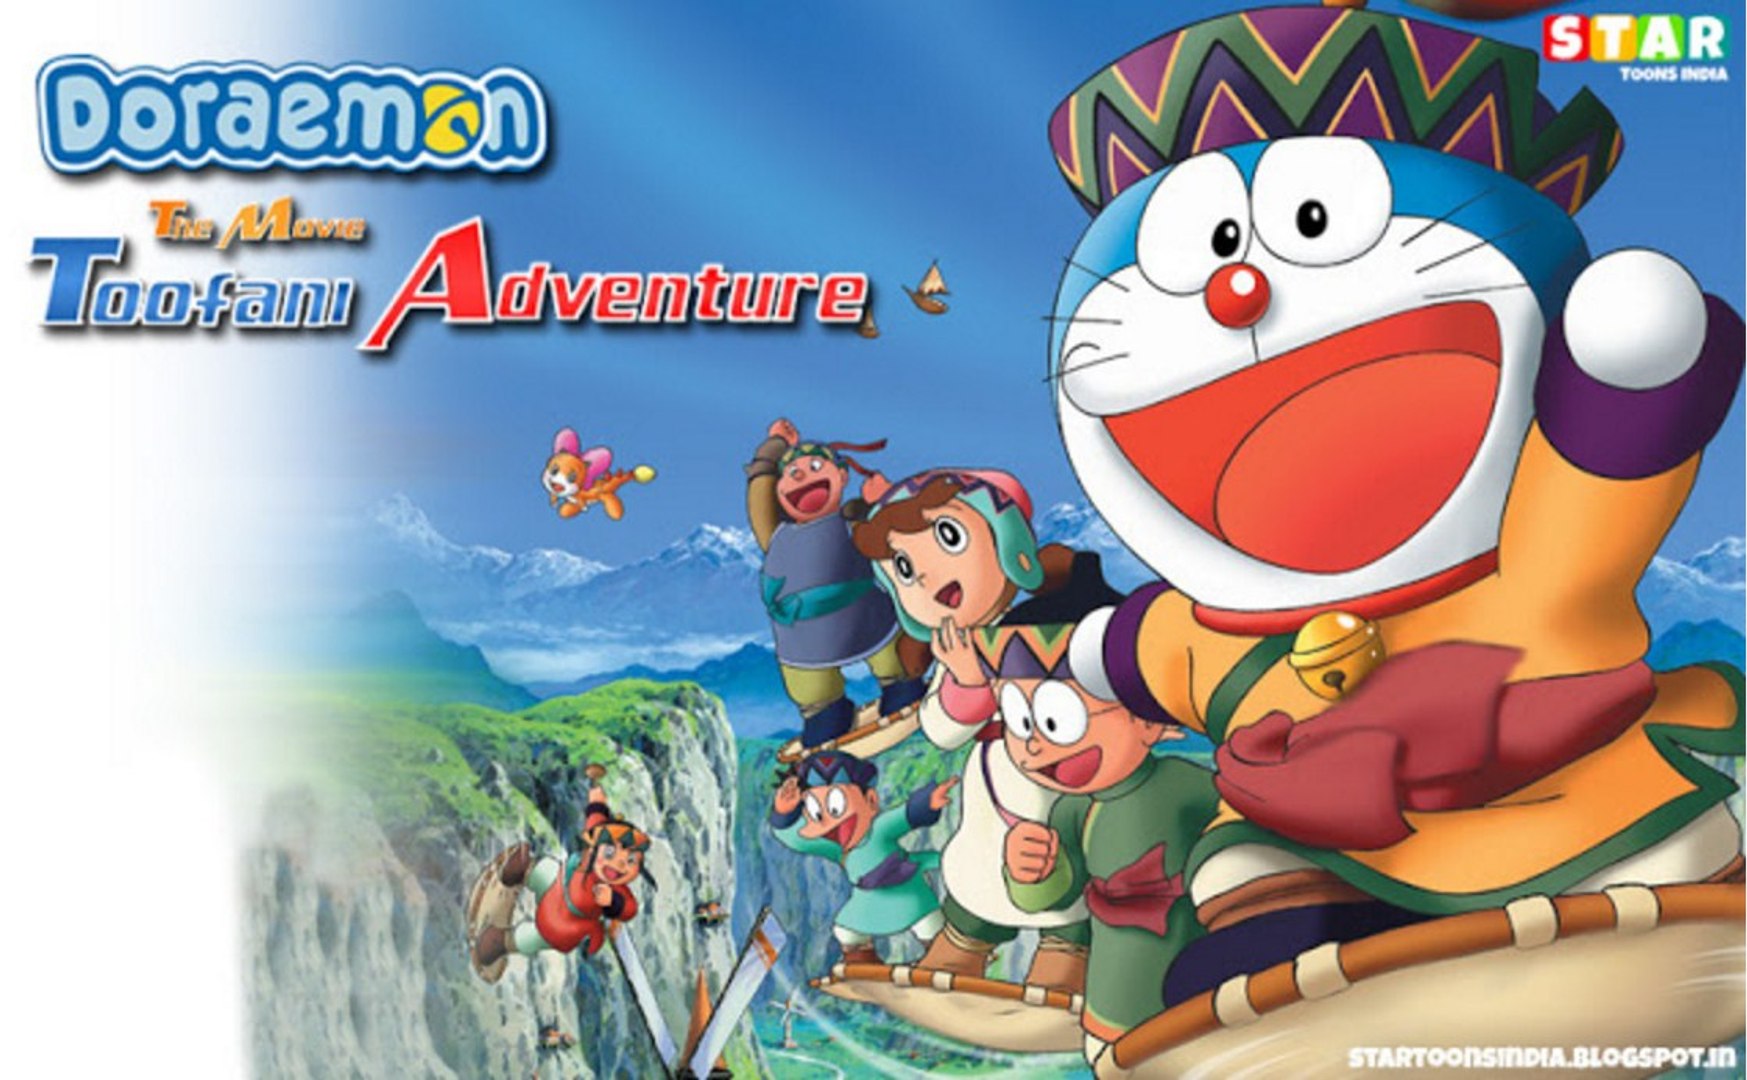 Doraemon The Movie Toofani Adventure In Hindi Full Hd Part 1 Video Dailymotion